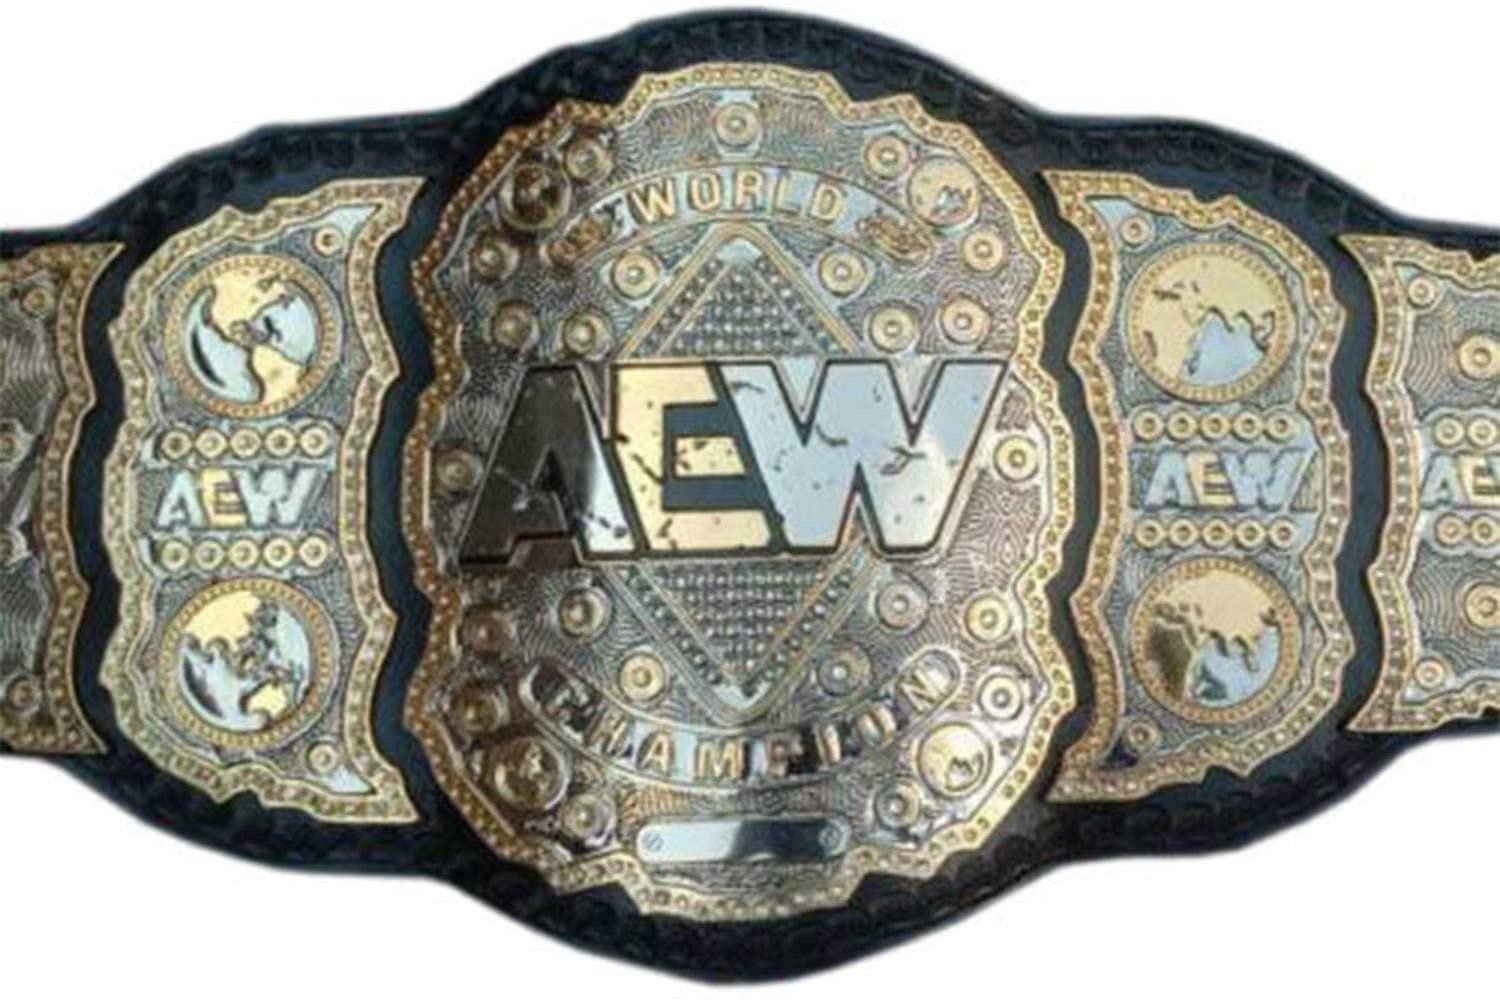 World team championship. Титулы AEW. Титул чемпиона AEW. WWE Heavyweight Championship. Пояс WWE World Heavyweight Wrestling Champion.